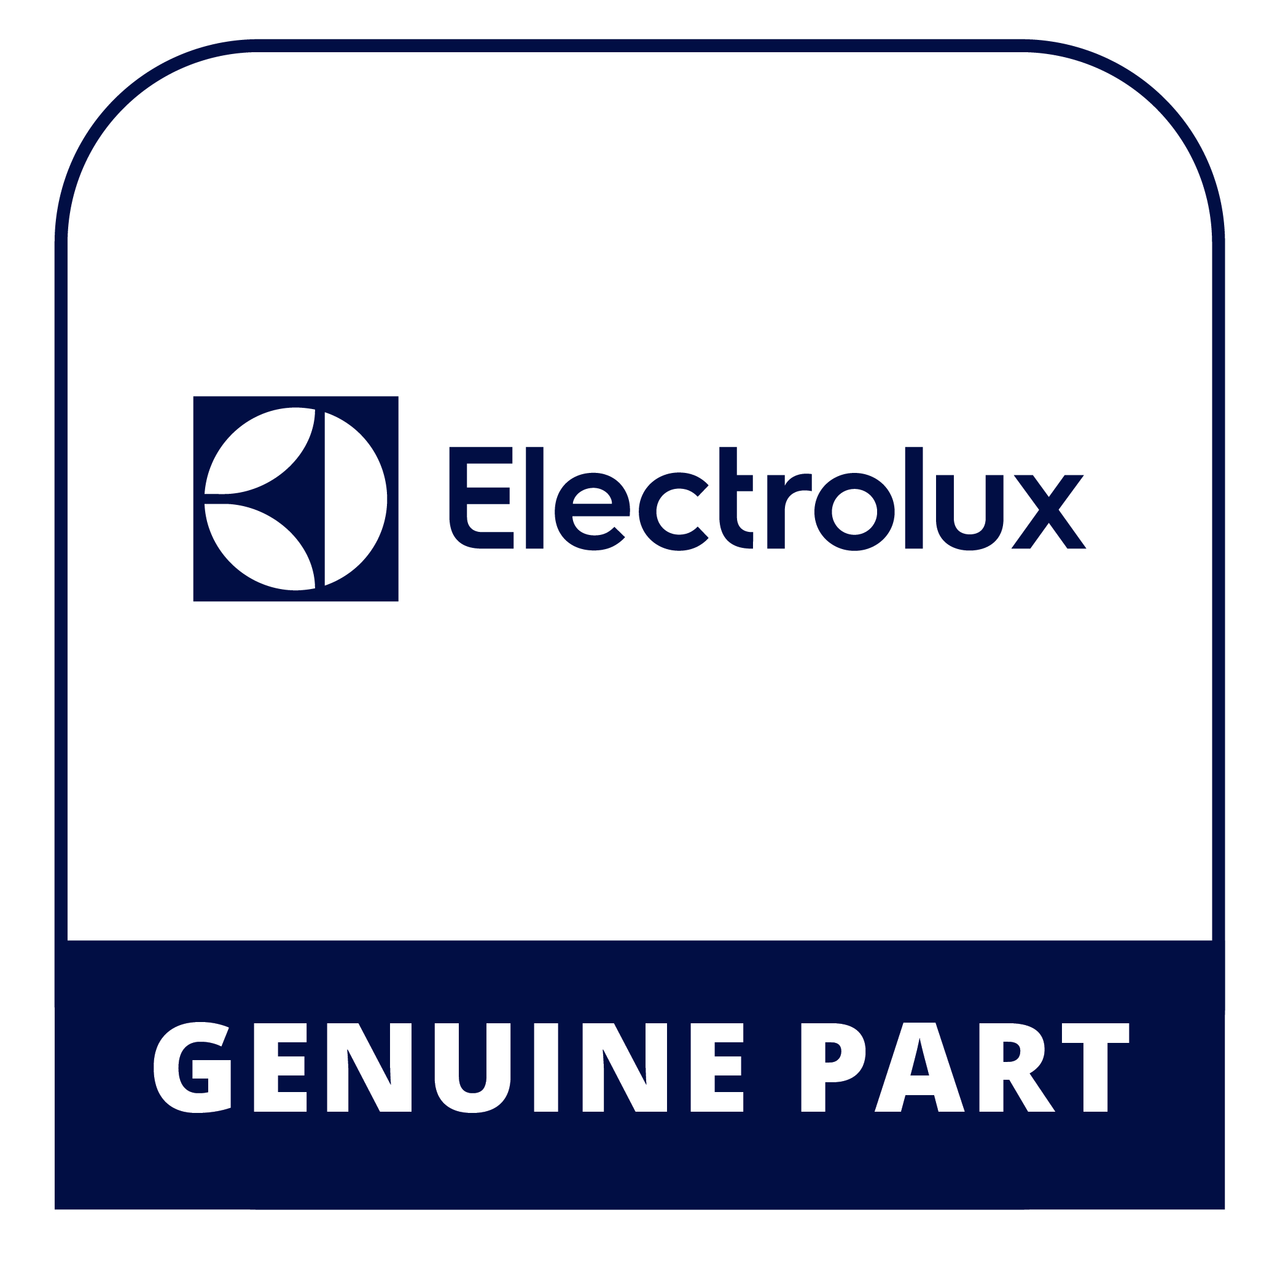 Frigidaire - Electrolux 5304440346 Label - Genuine Electrolux Part